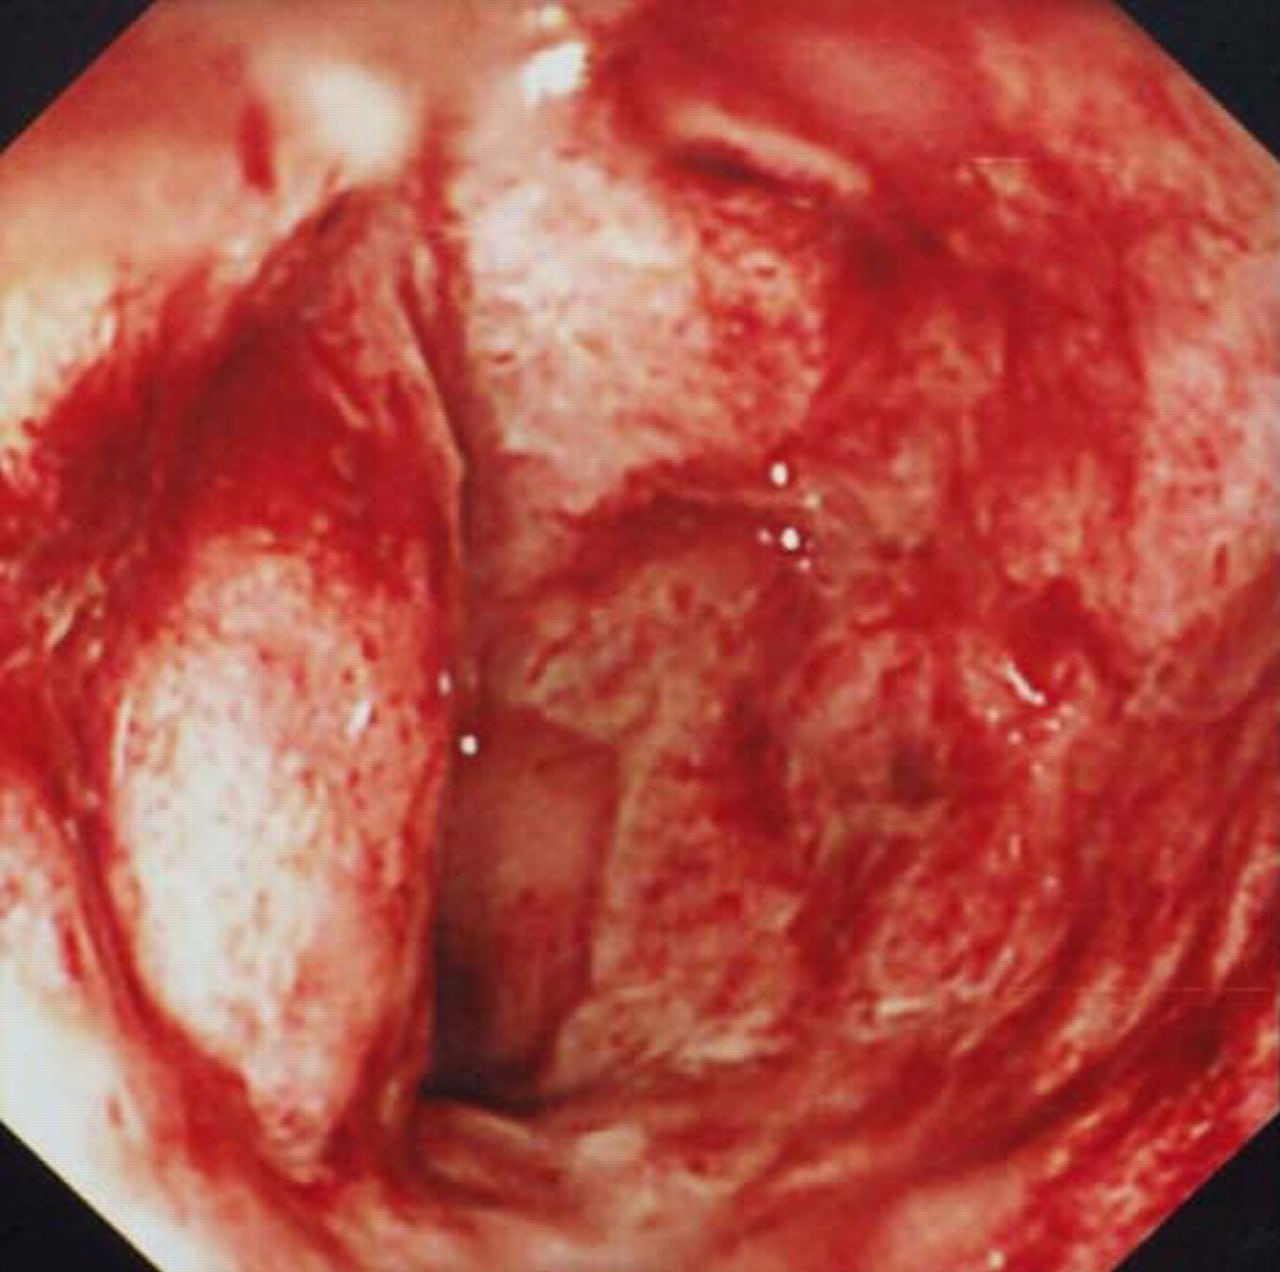 Lymphogranuloma venereum and HIV infection: misdiagnosed as Crohn